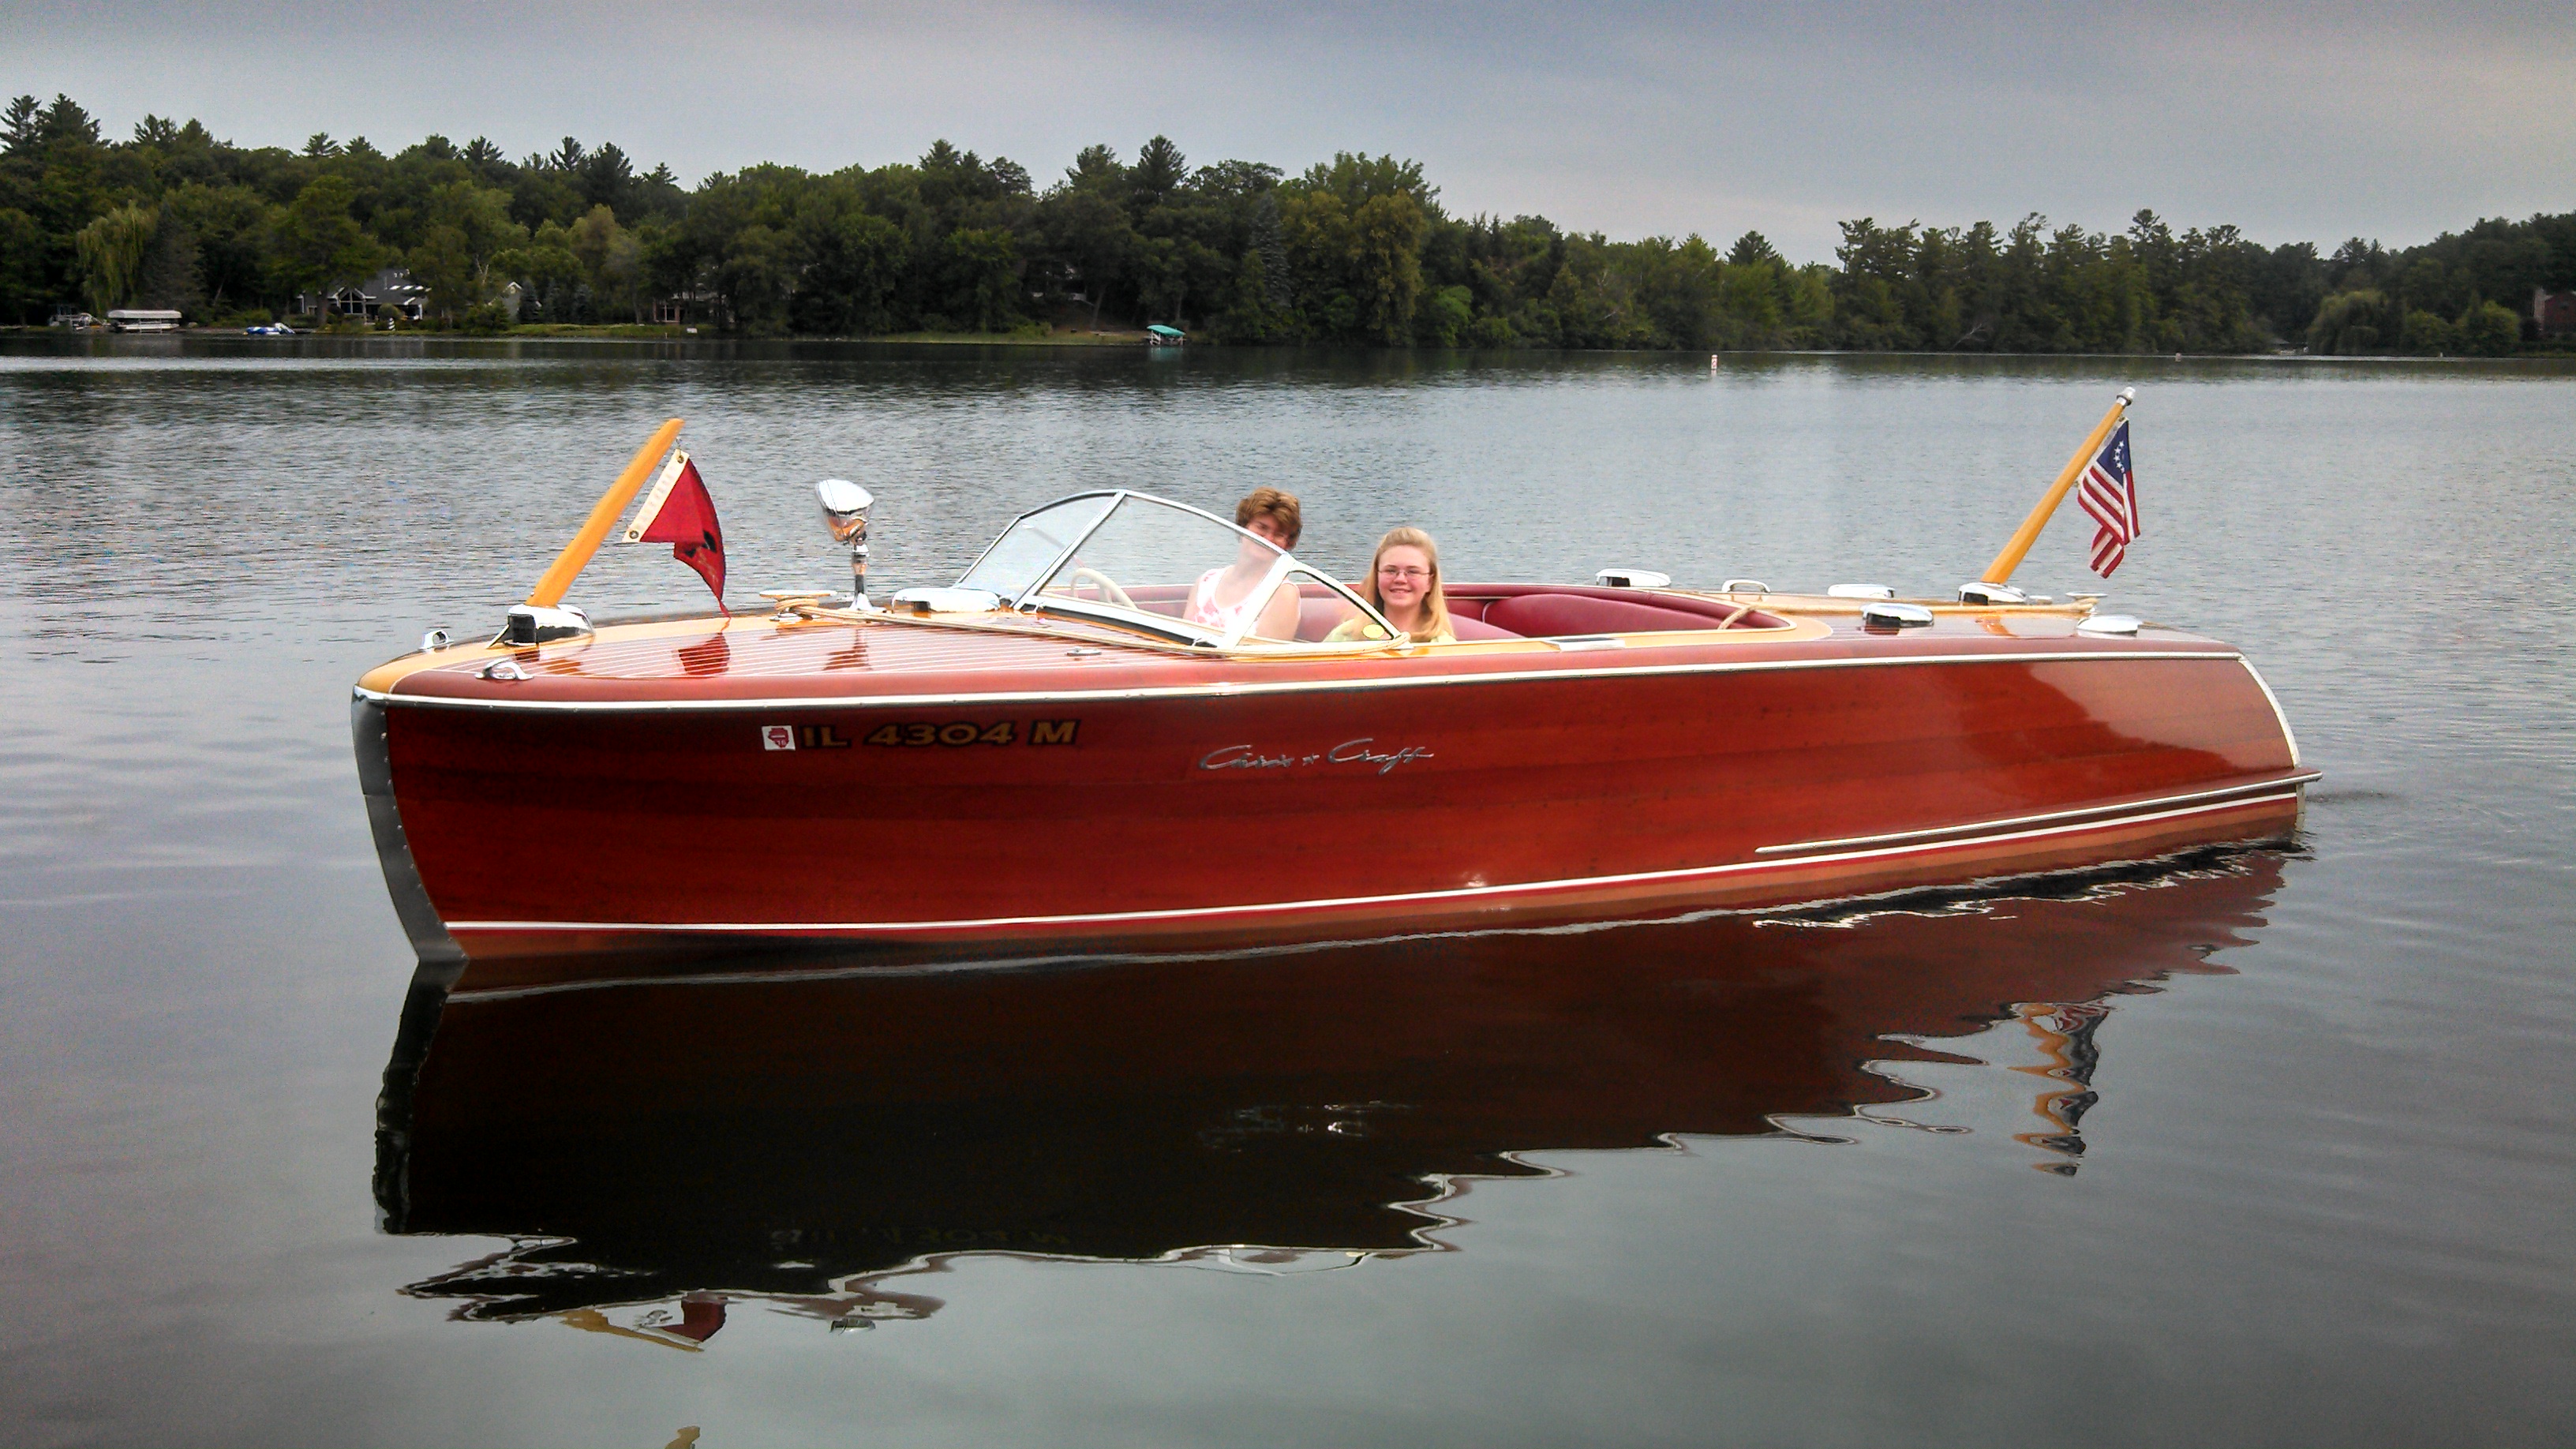 Entries - Geneva Lakes Boat Show